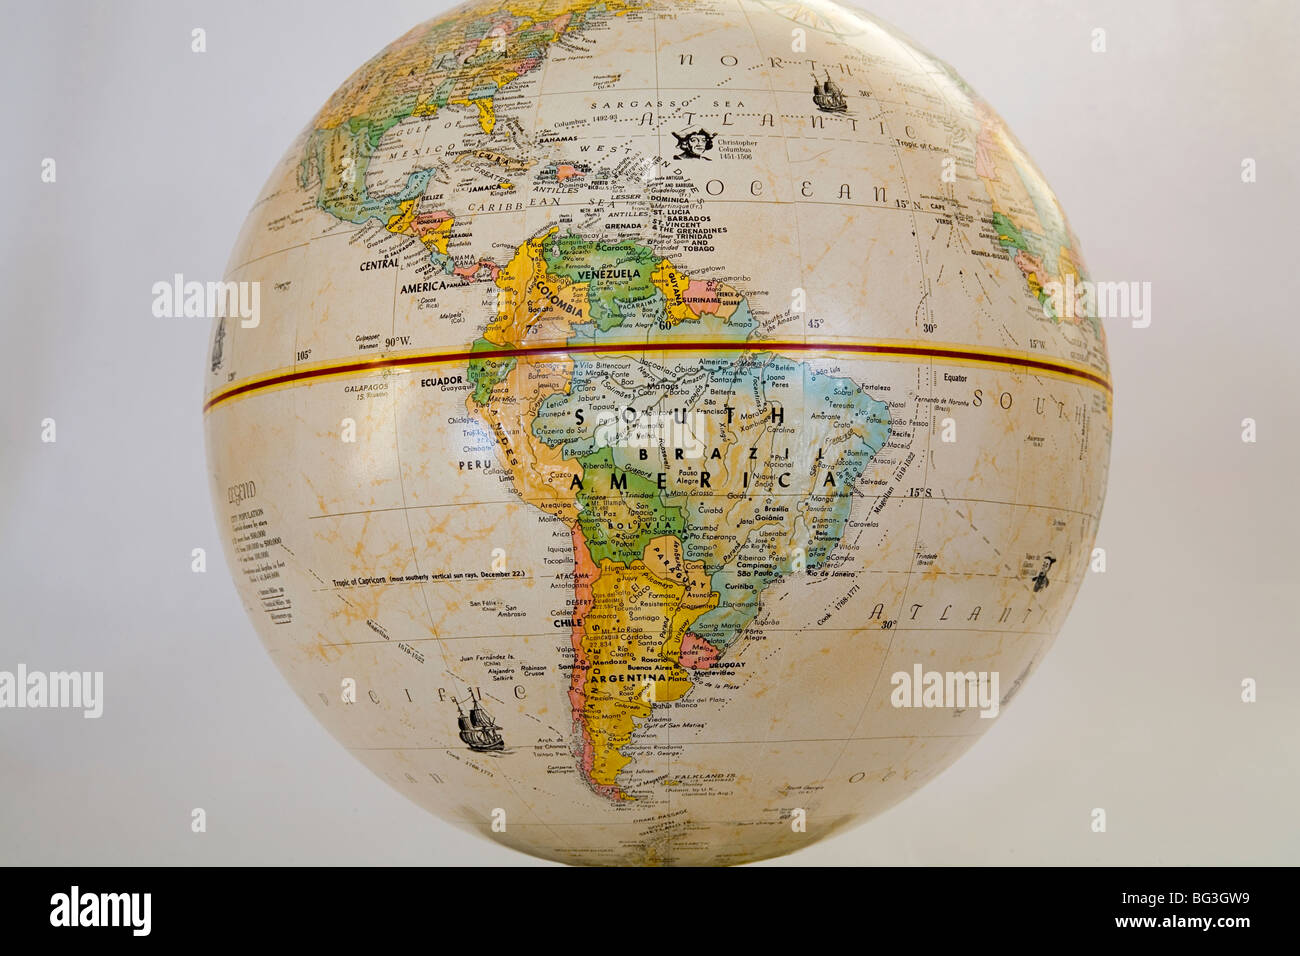 World Globe Globe Earth World Map of the World Stock Photo